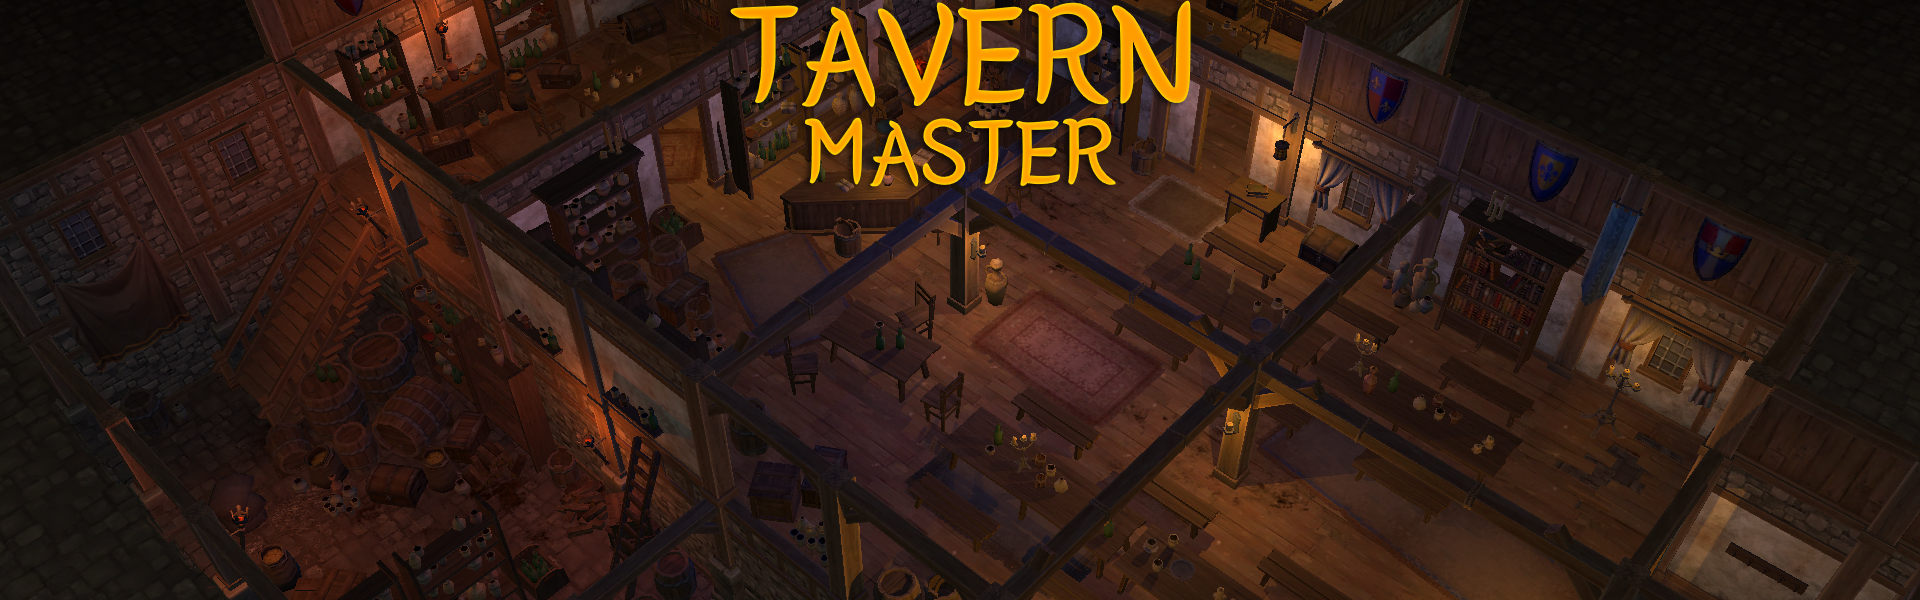 tavern master g2a